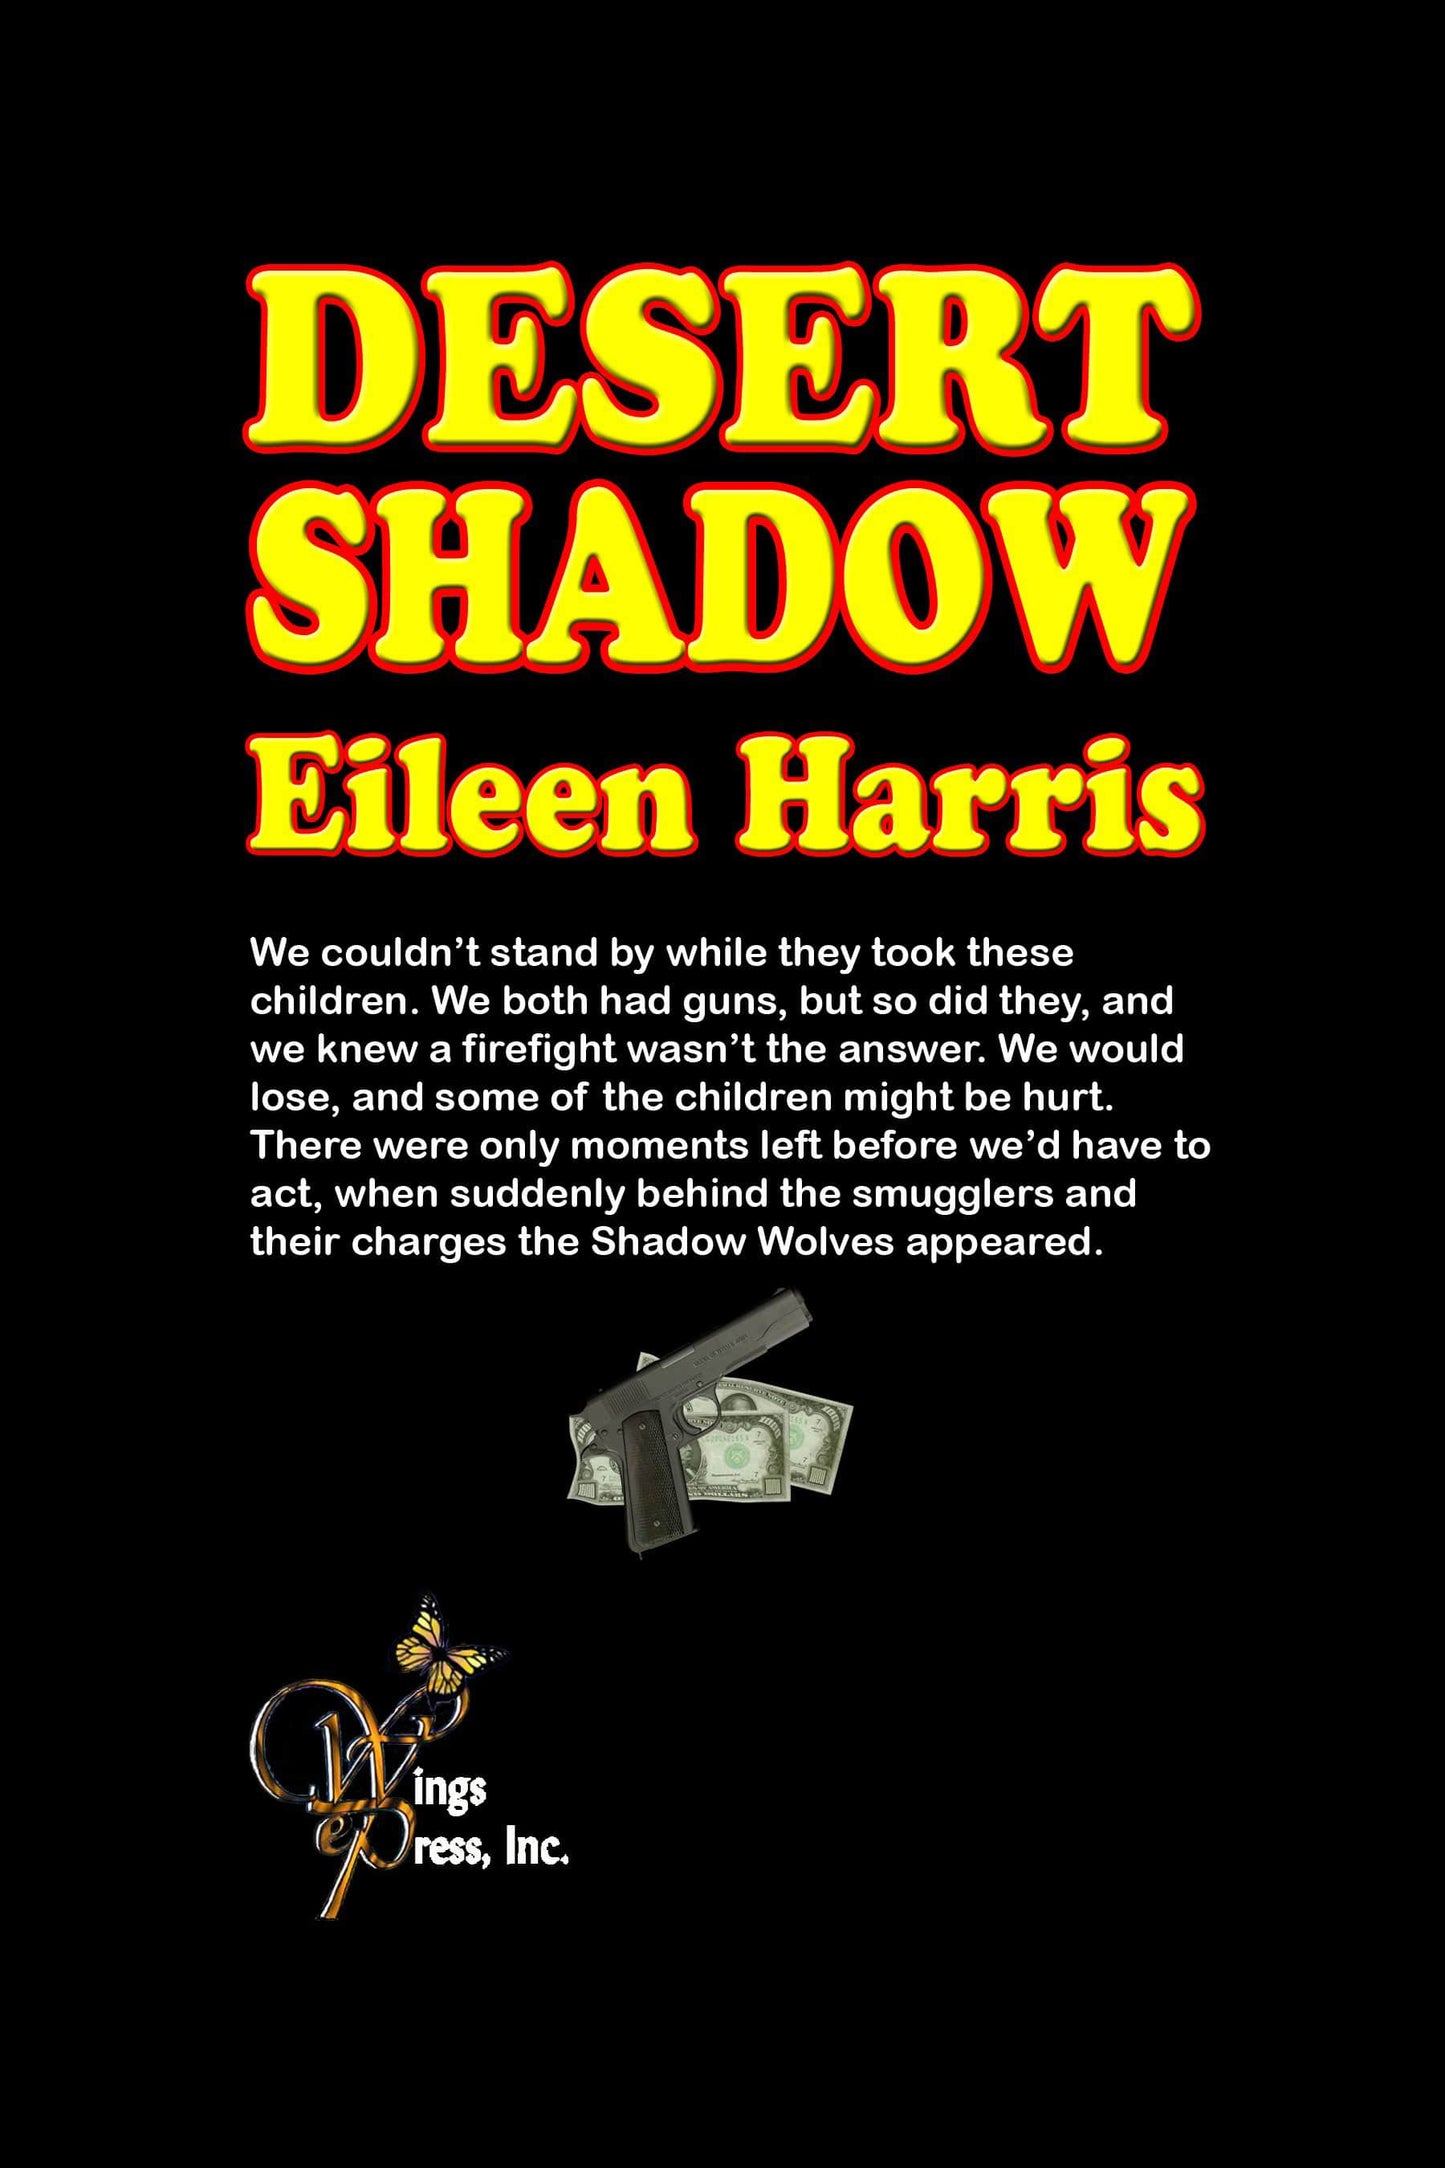 Desert Shadow